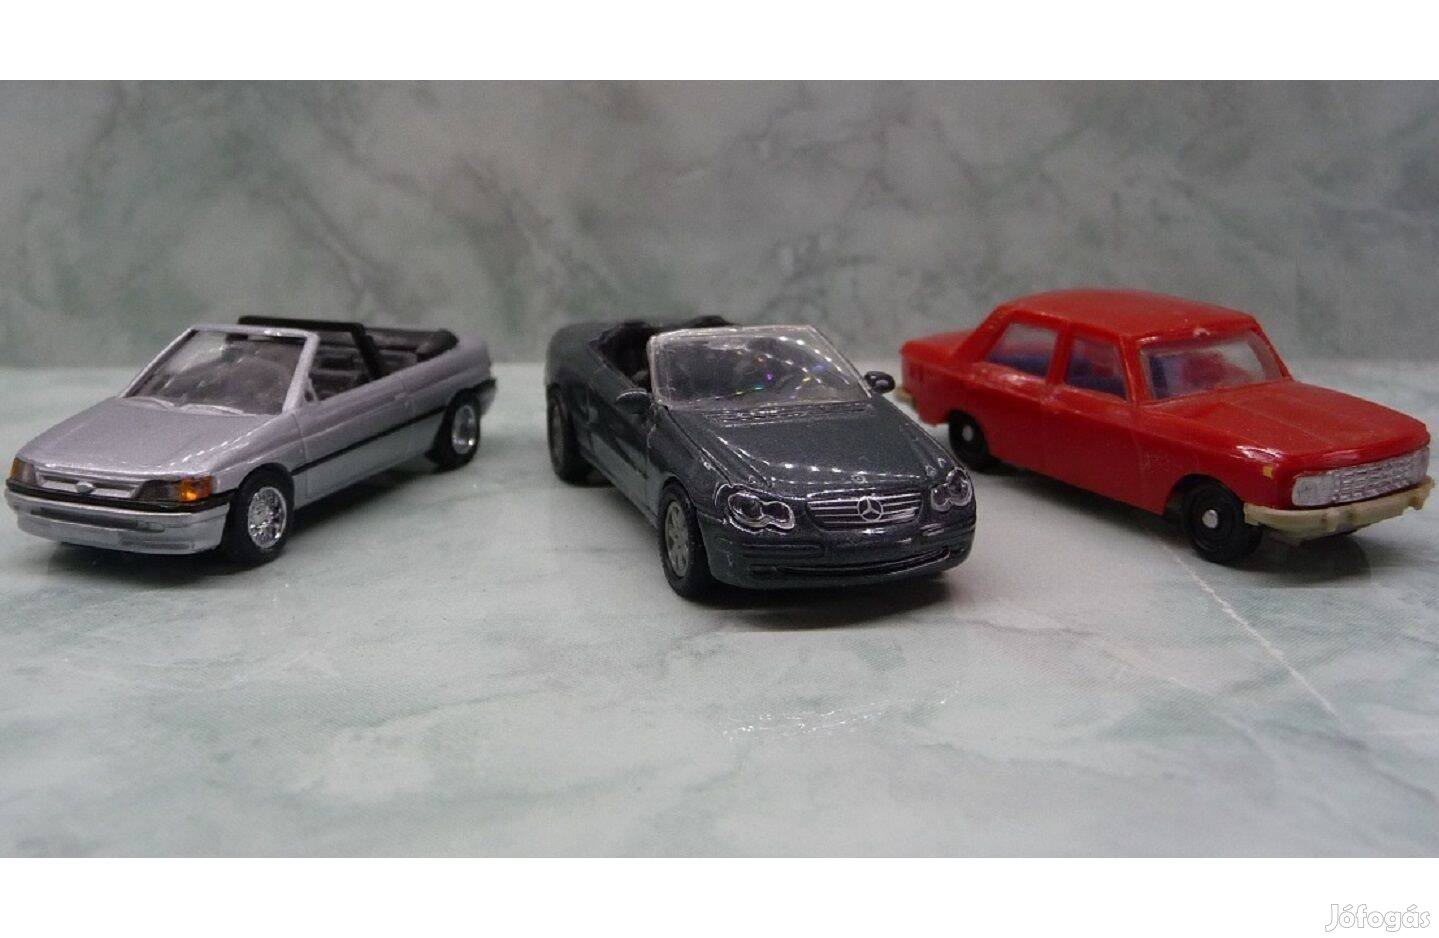 Ford Escort Cabrio, Mercedes CLK Cabrio, Wartburg 353 1/87 H0 modellek